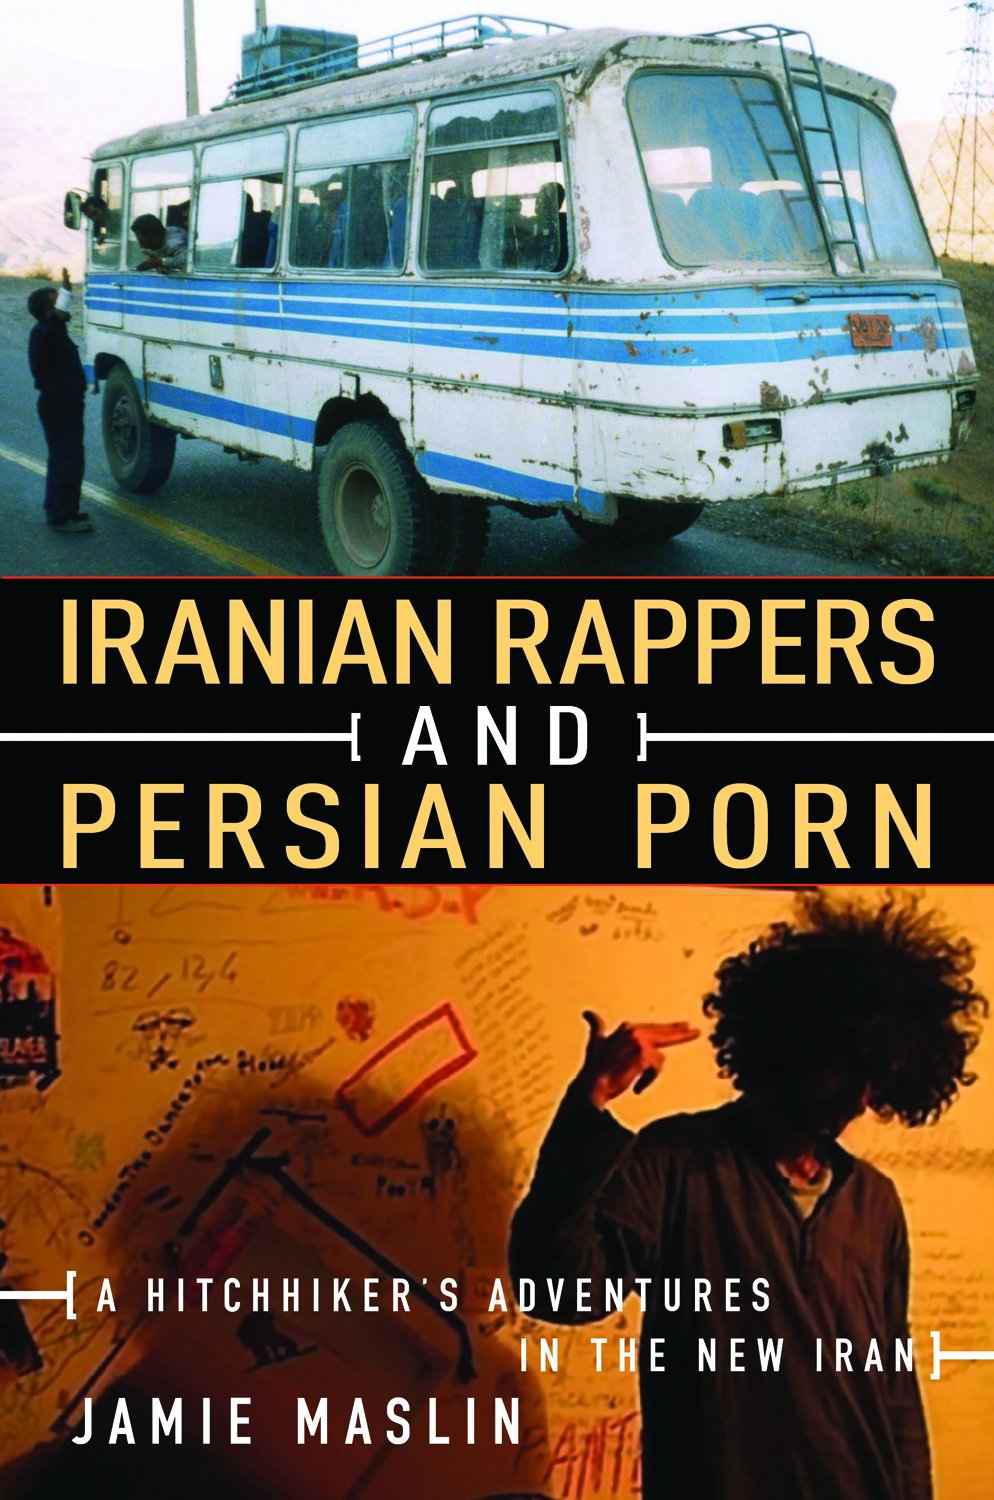 Maslin Jamie - Iranian Rappers and Persian Porn, скачать бесплатно книгу в формате fb2, doc, rtf, html, txt